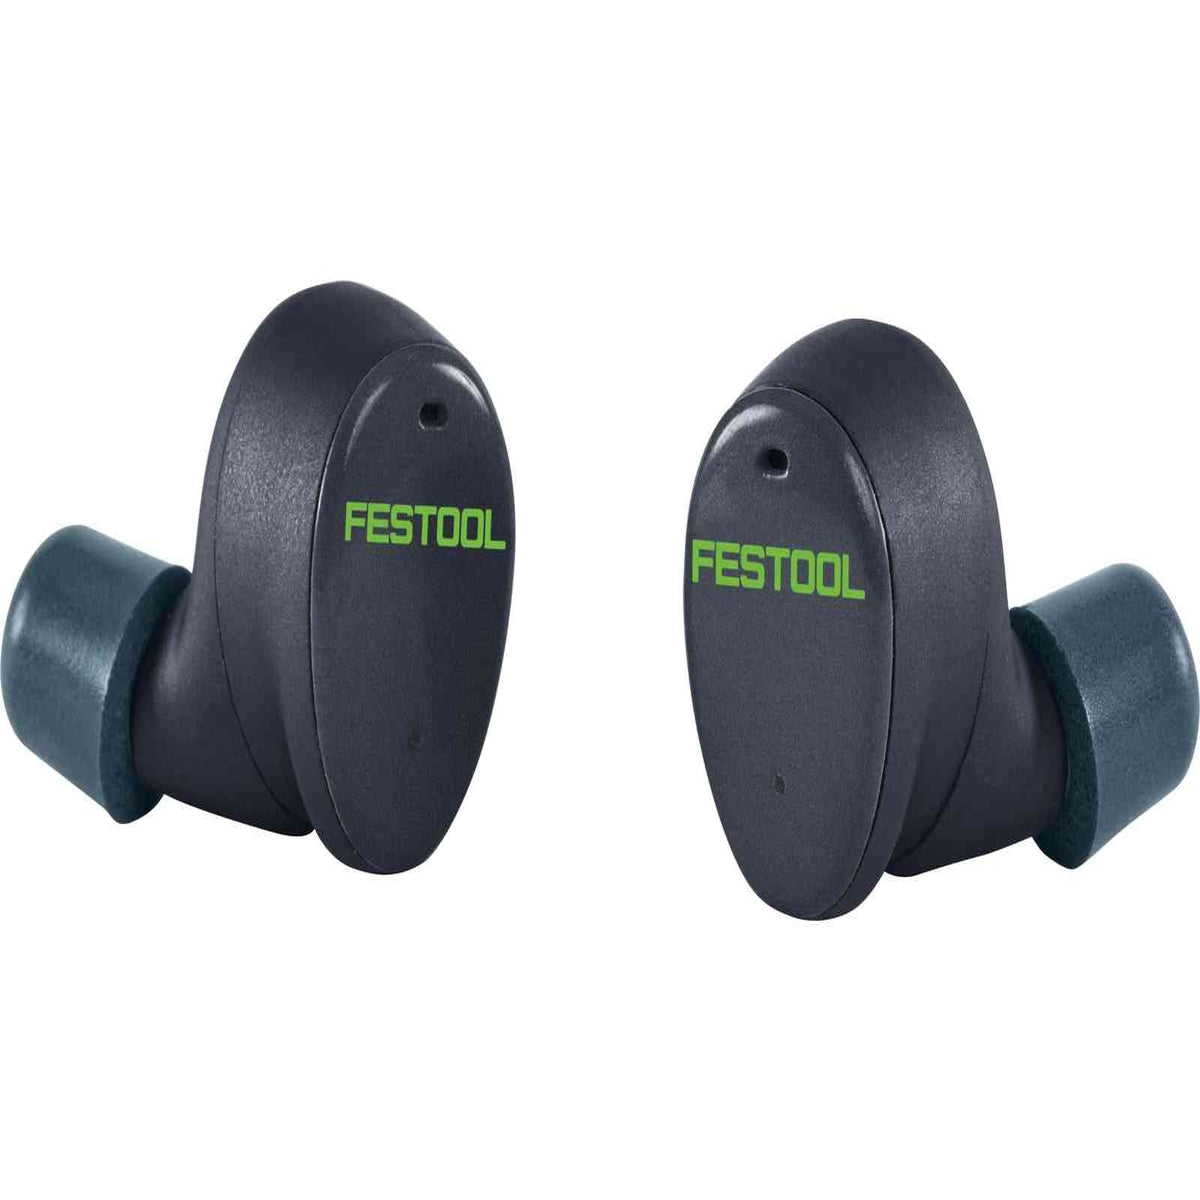 Festool GHS25I Ear Protection Earplugs Set of 7 Pieces - 577792